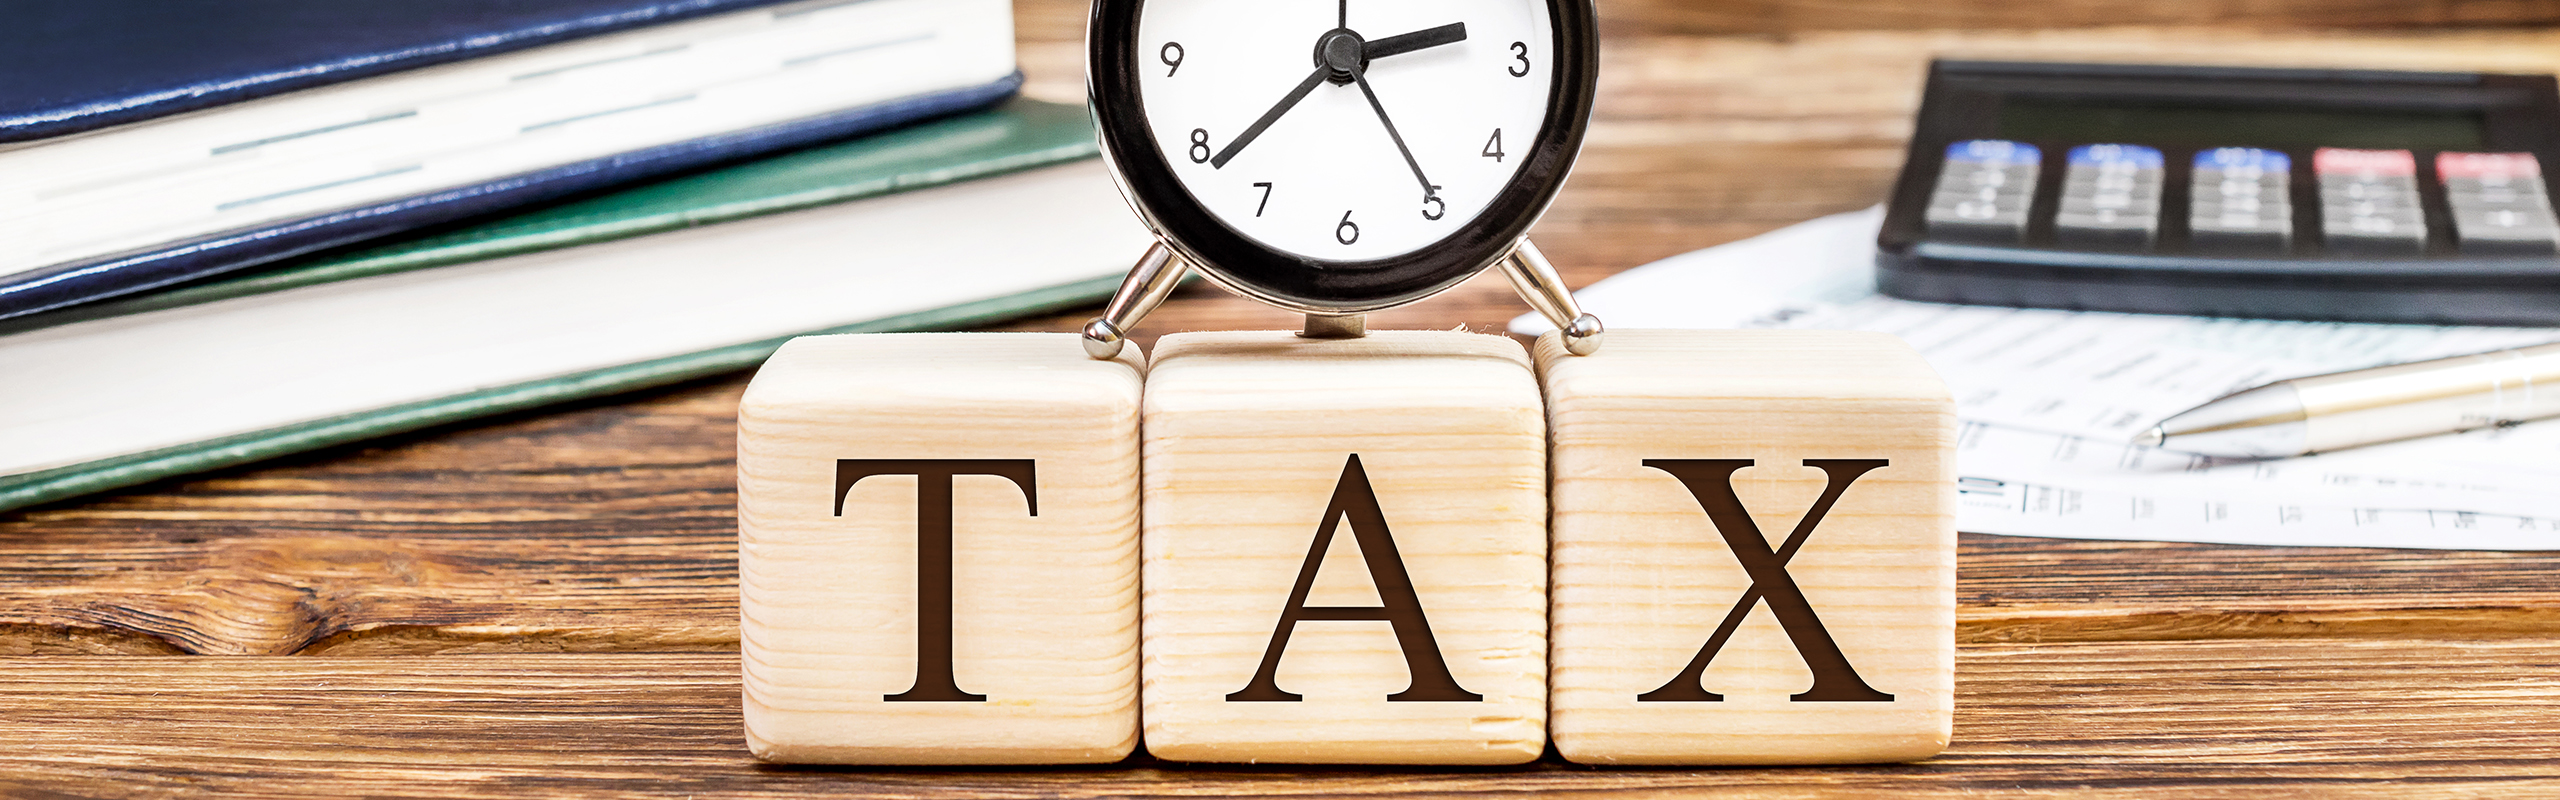 Year-end tax strategies